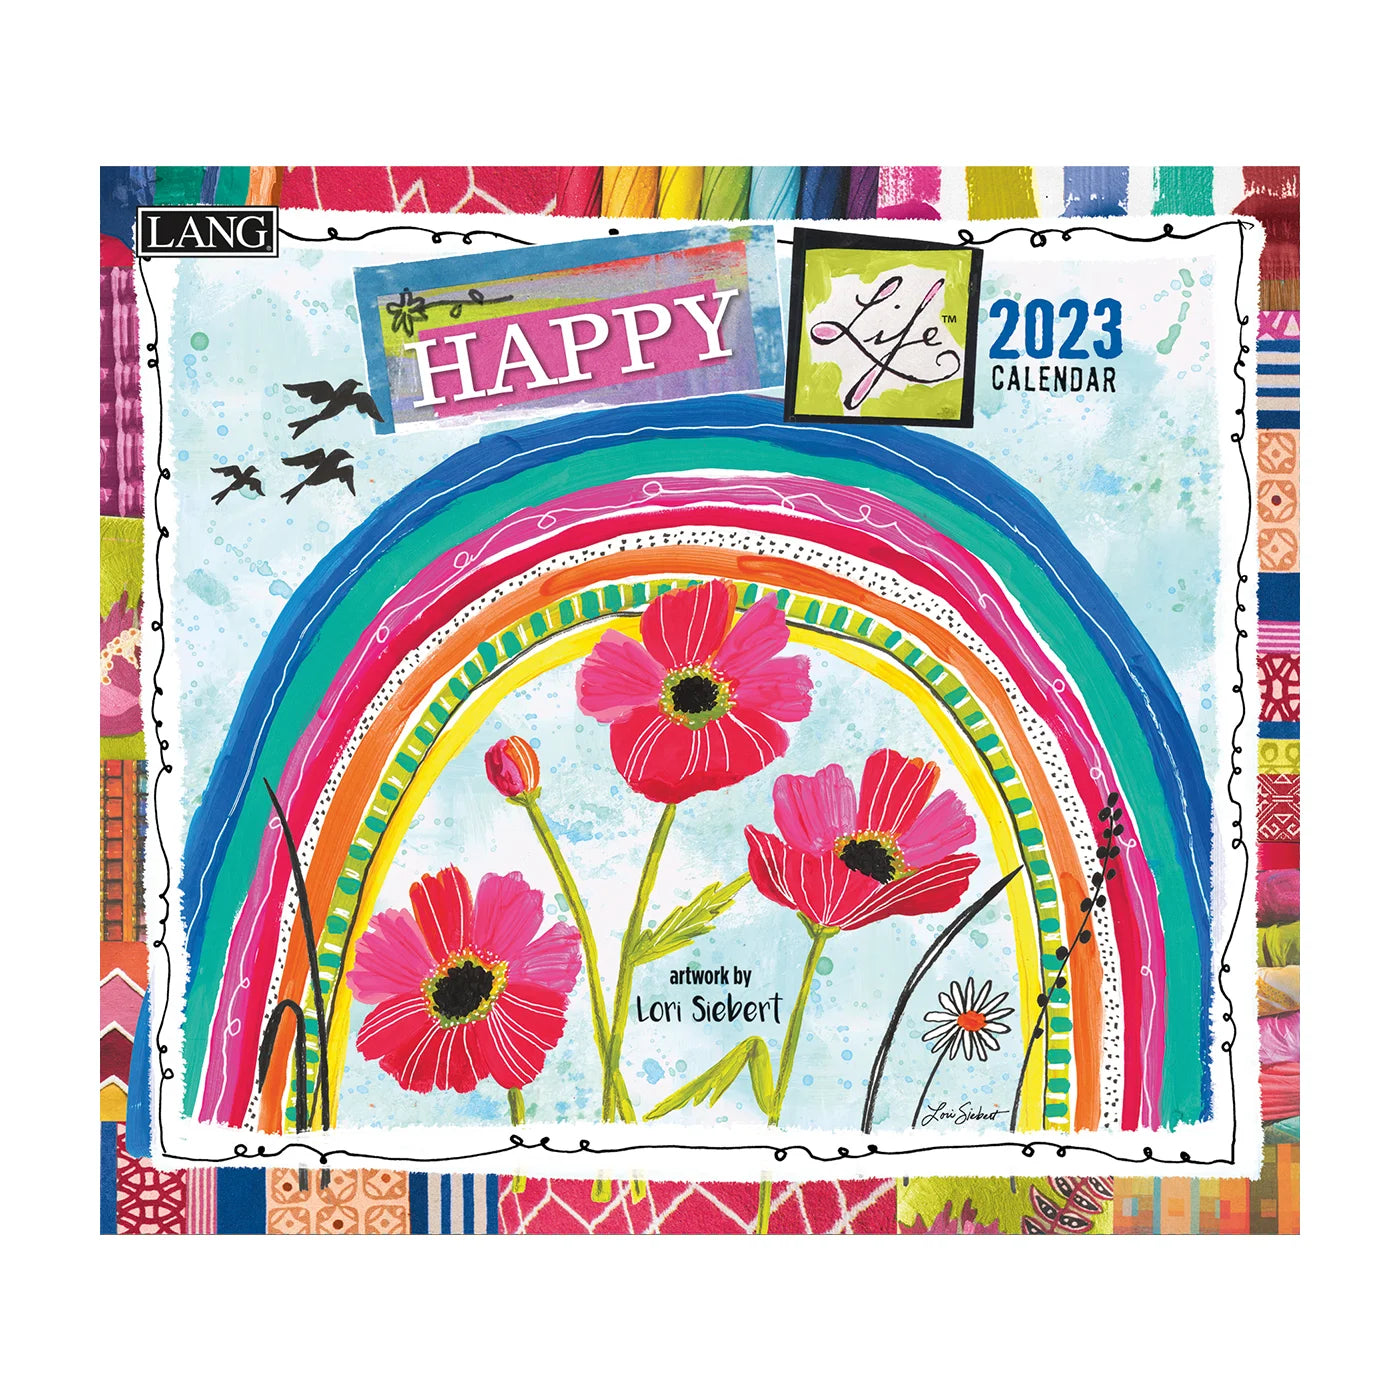 2023 LANG Happy Life by Lori Siebert - Deluxe Wall Calendar